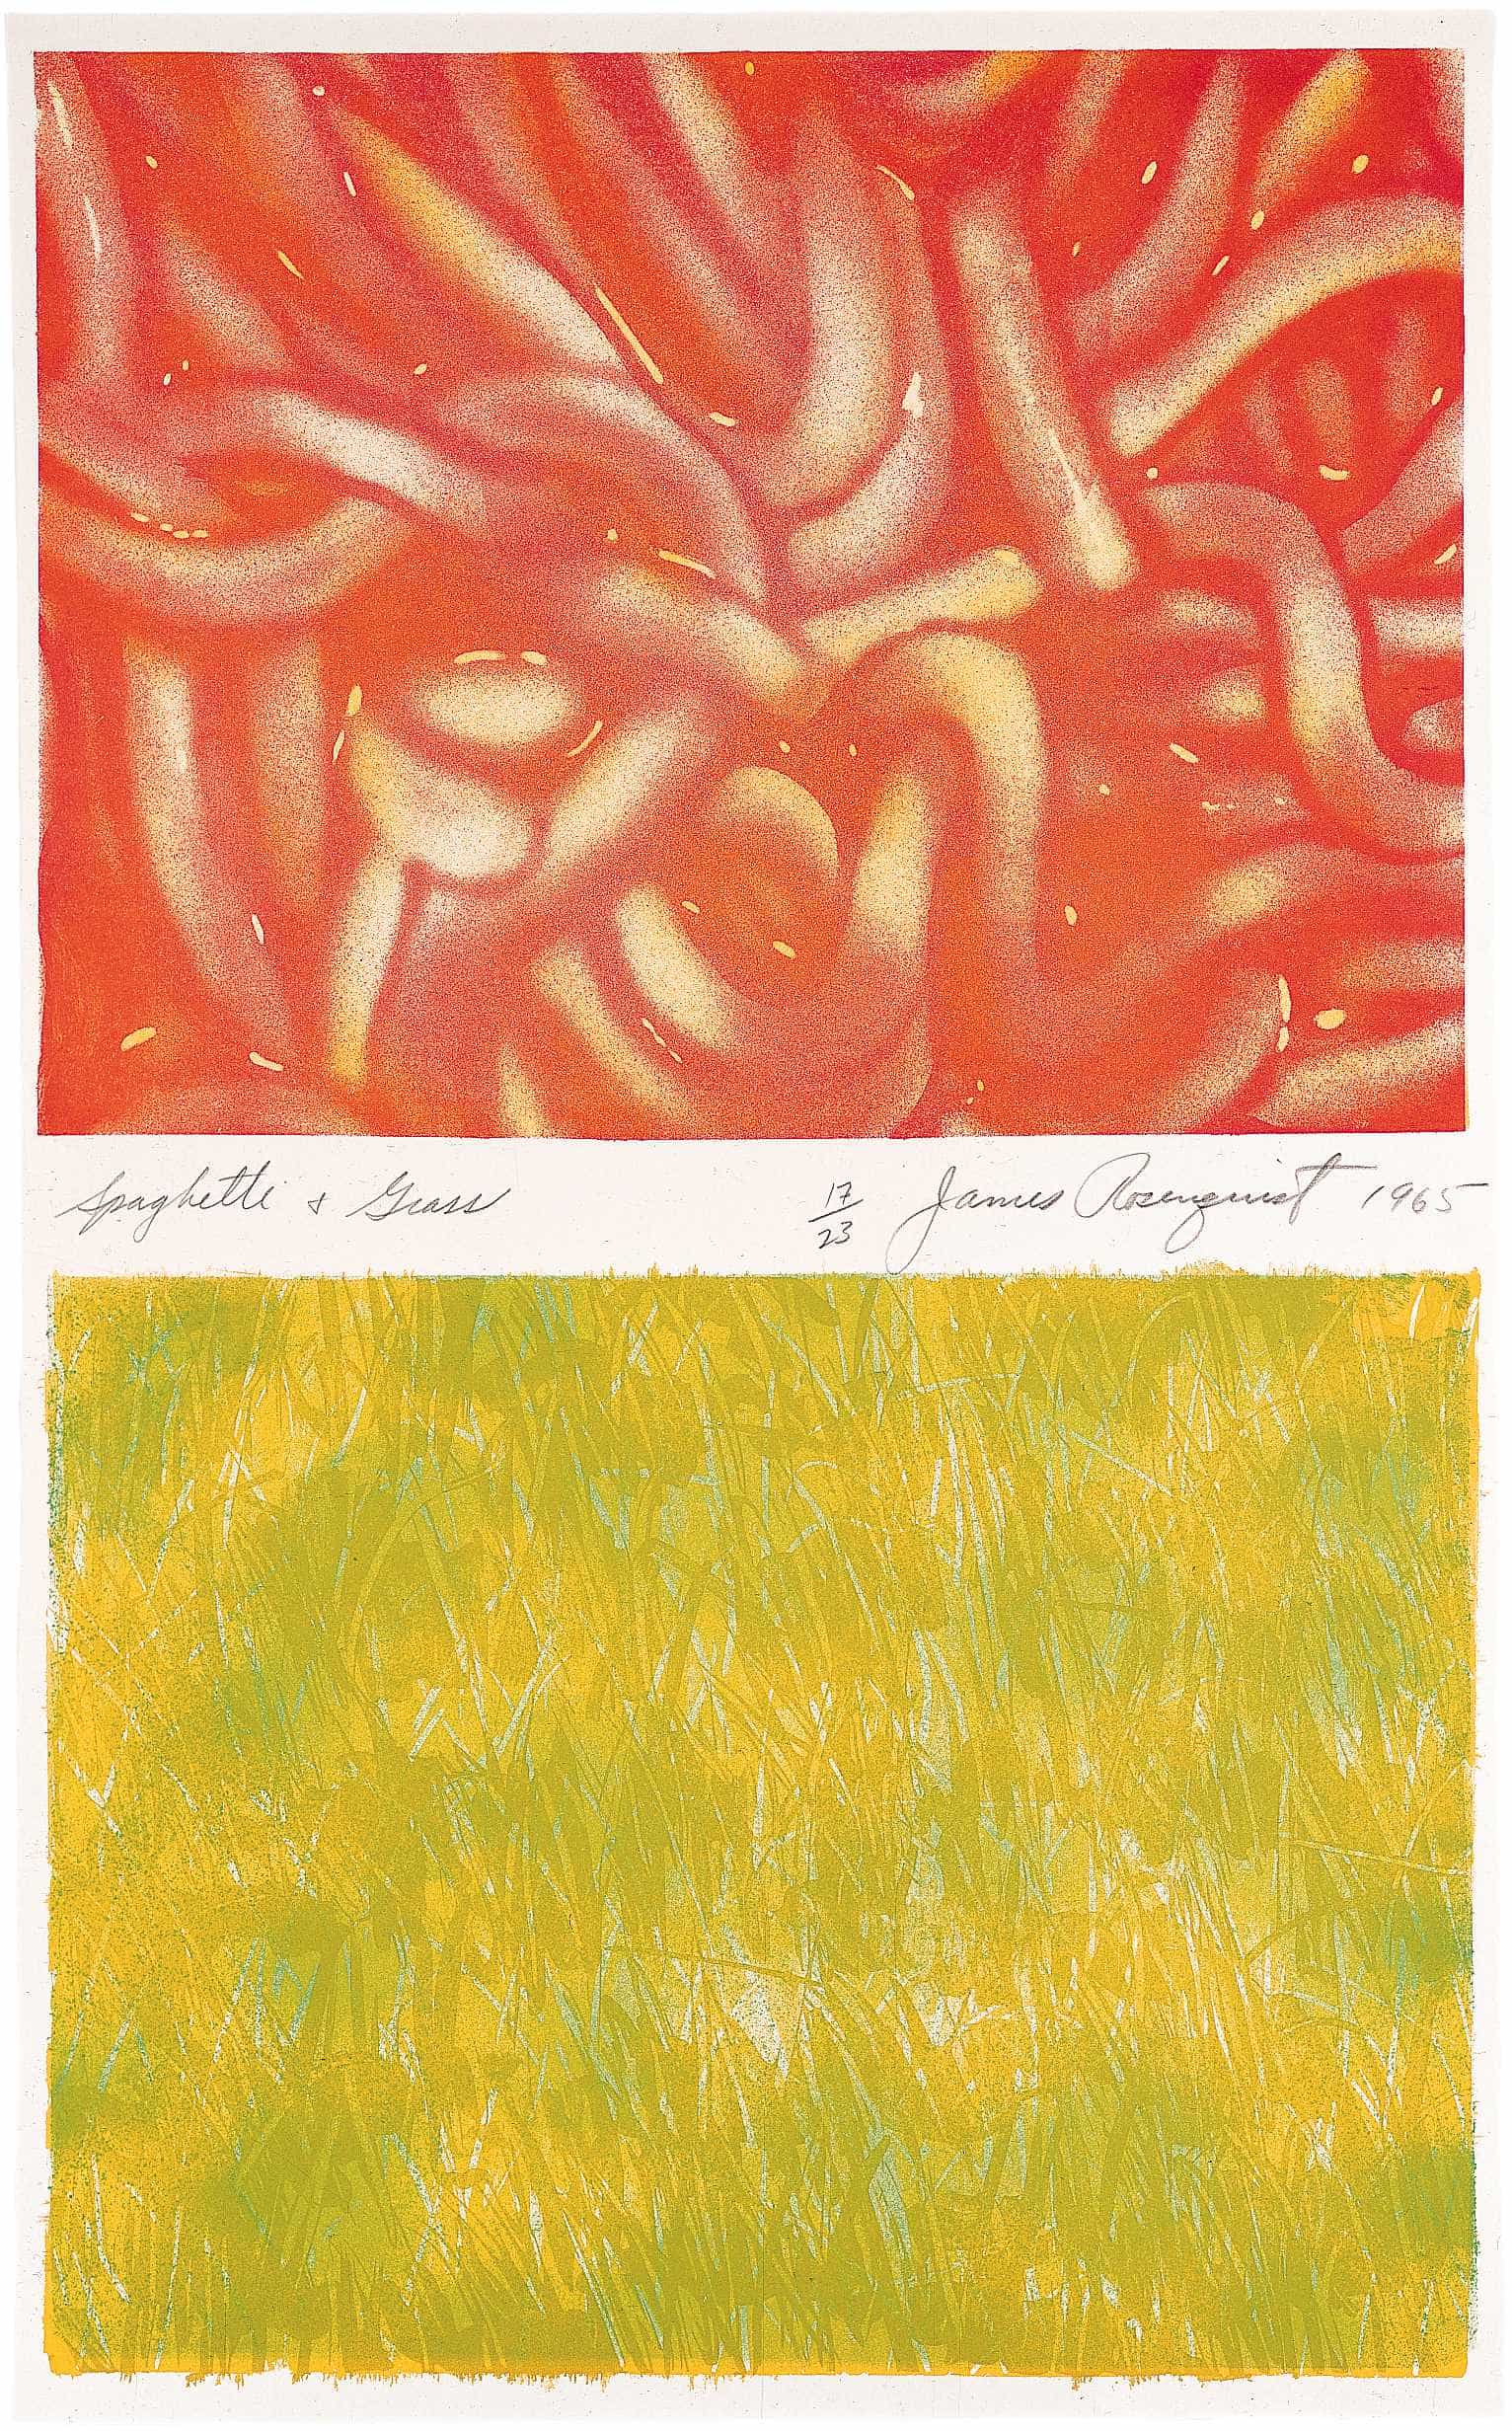 James Rosenquist, Spaghetti & Grass, 1965